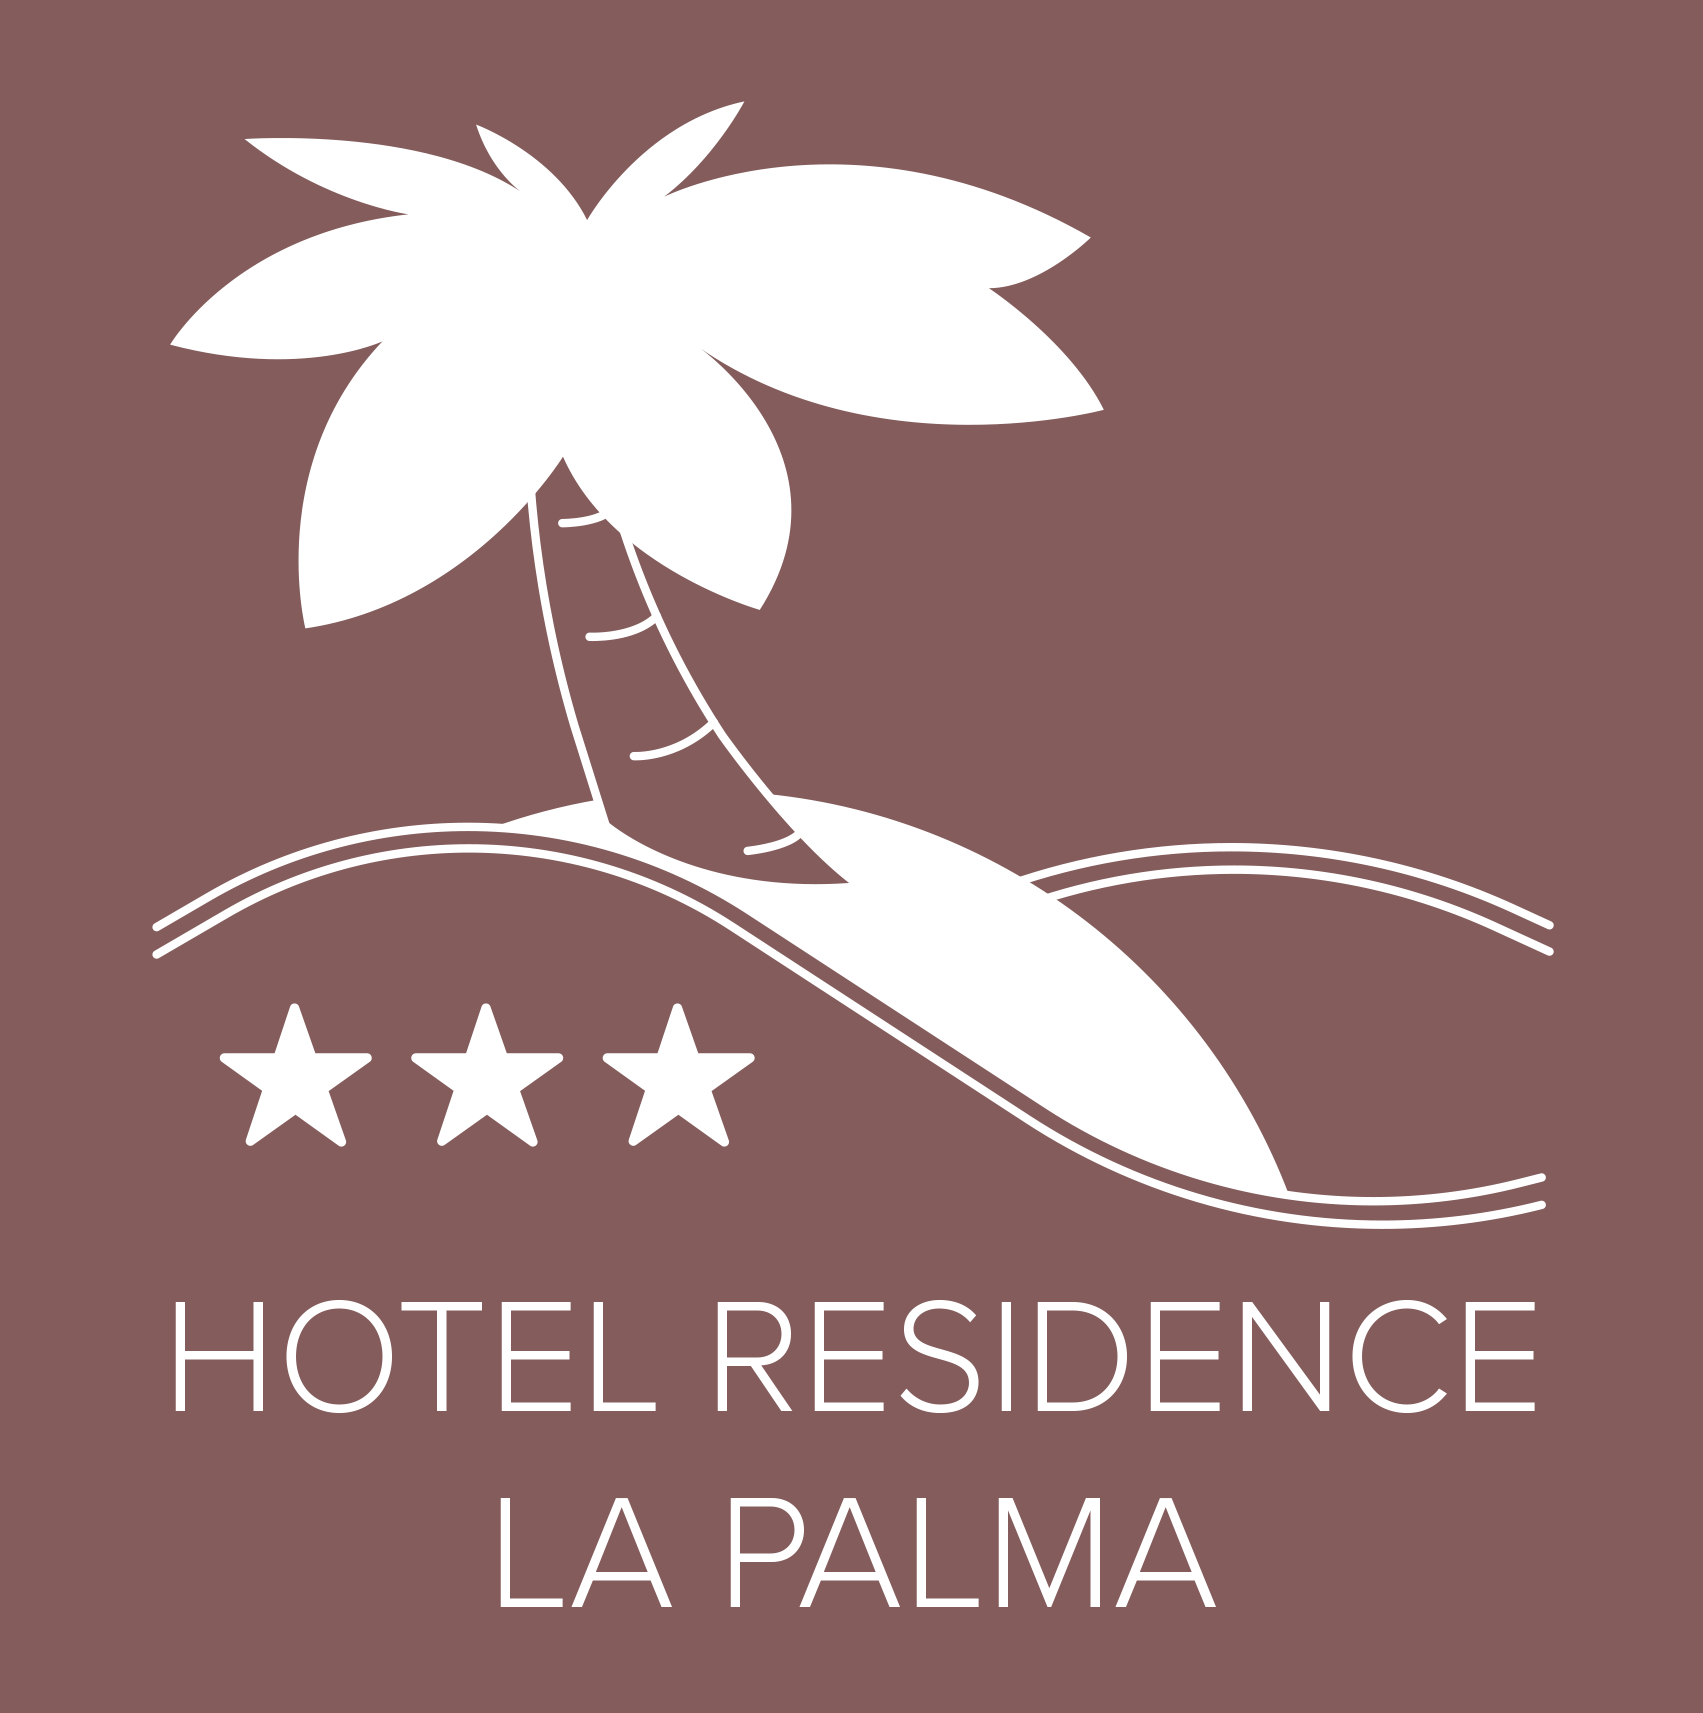 HOTEL RESIDENCE LA PALMA - LOGO